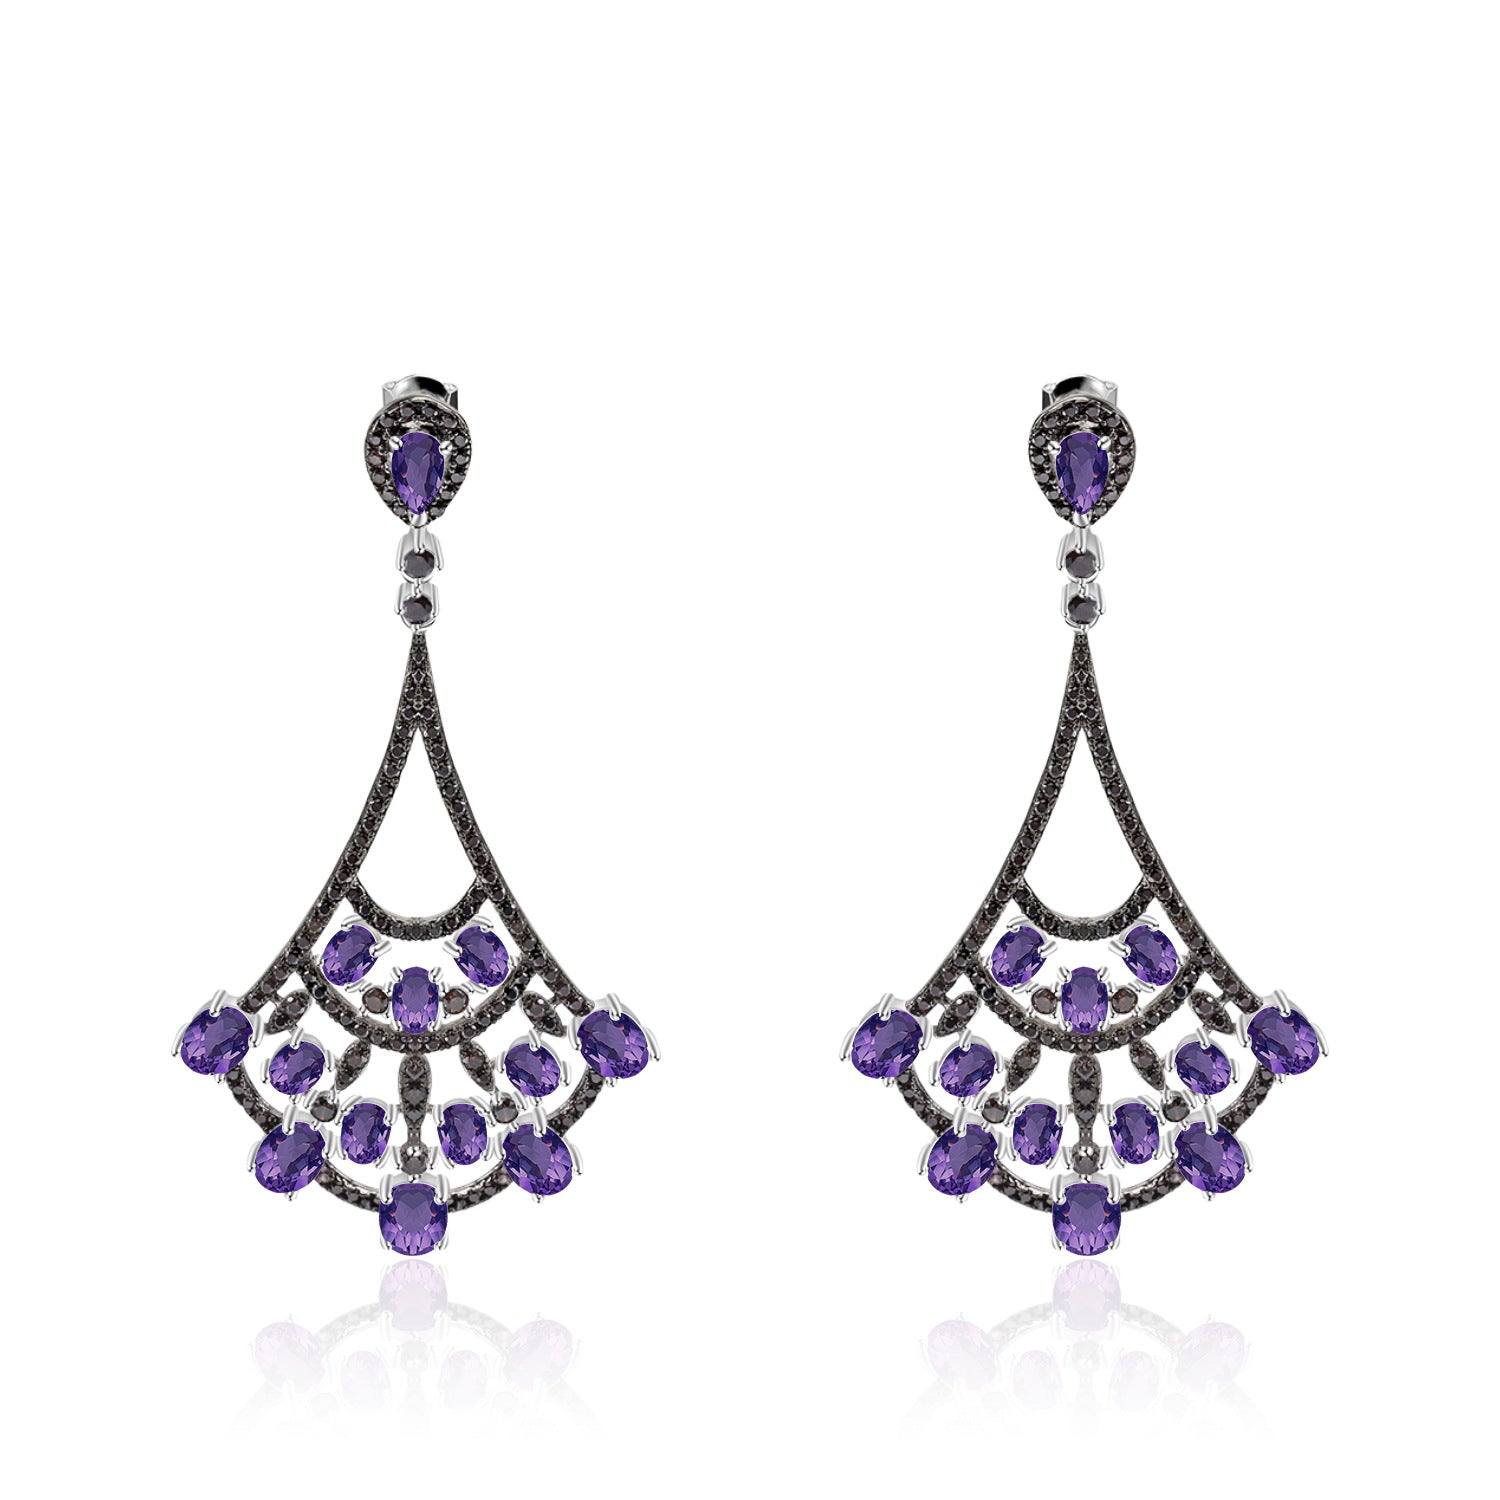 Natural Colourful Gemstones Fan-shaped Silver Drop Earrings for Women